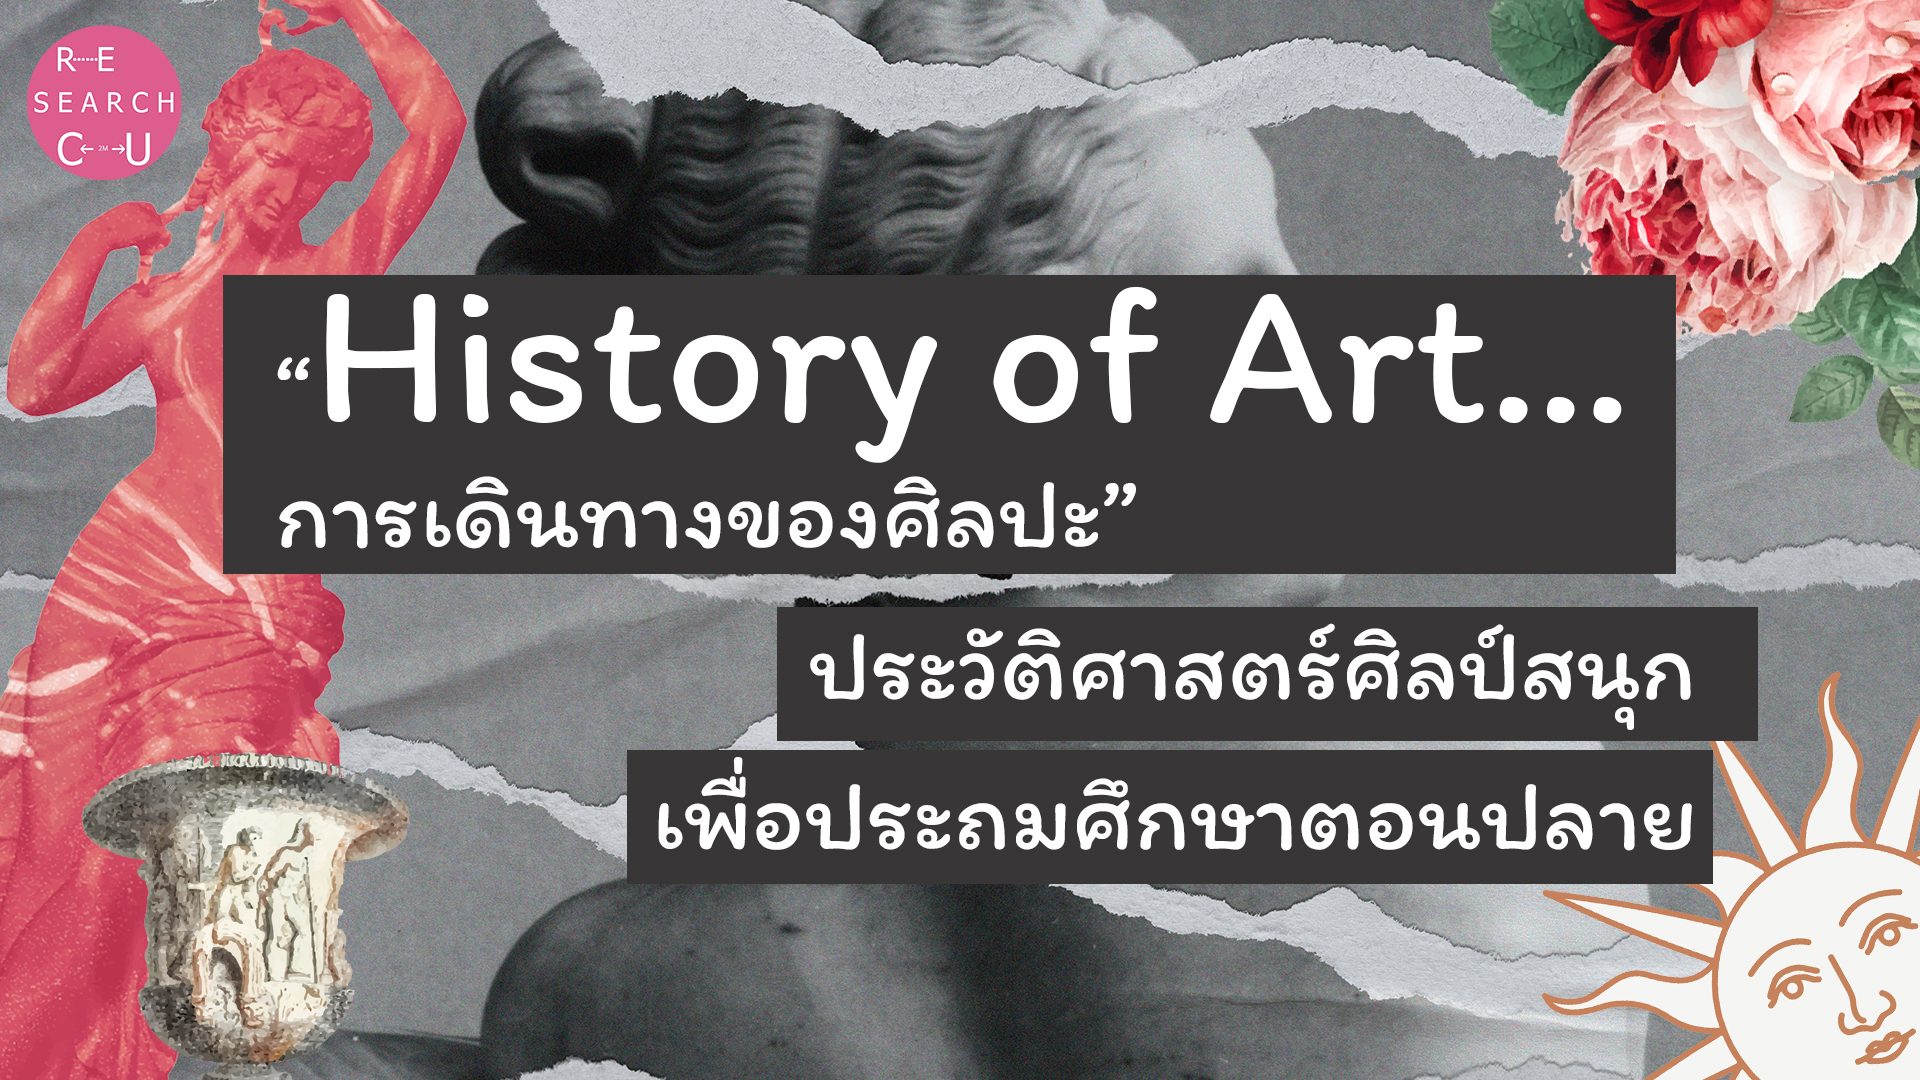 “History of Art…การเดินทางของศิลปะ” ประวัติศาสตร์ศิลป์สนุก เพื่อประถมศึกษาตอนปลาย